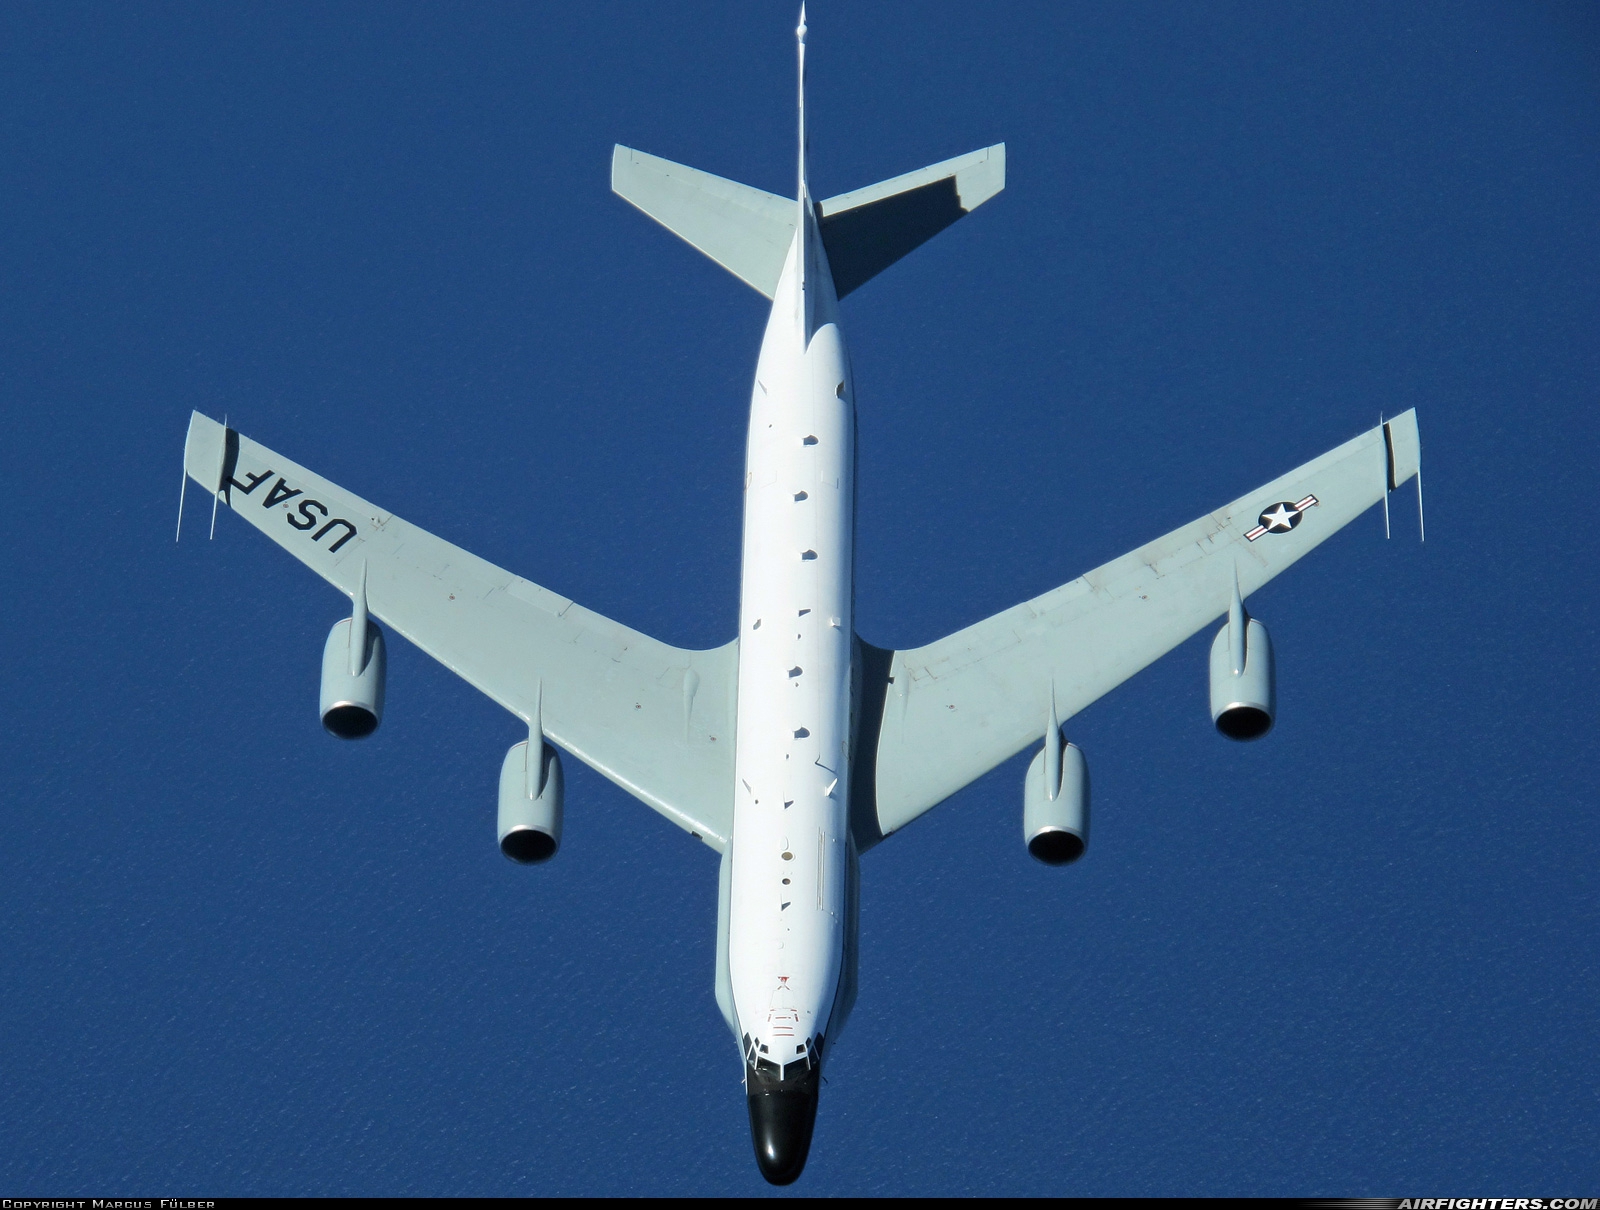 USA - Air Force Boeing RC-135W Rivet Joint (717-158) 62-4139 at Mediterranean Sea, International Airspace